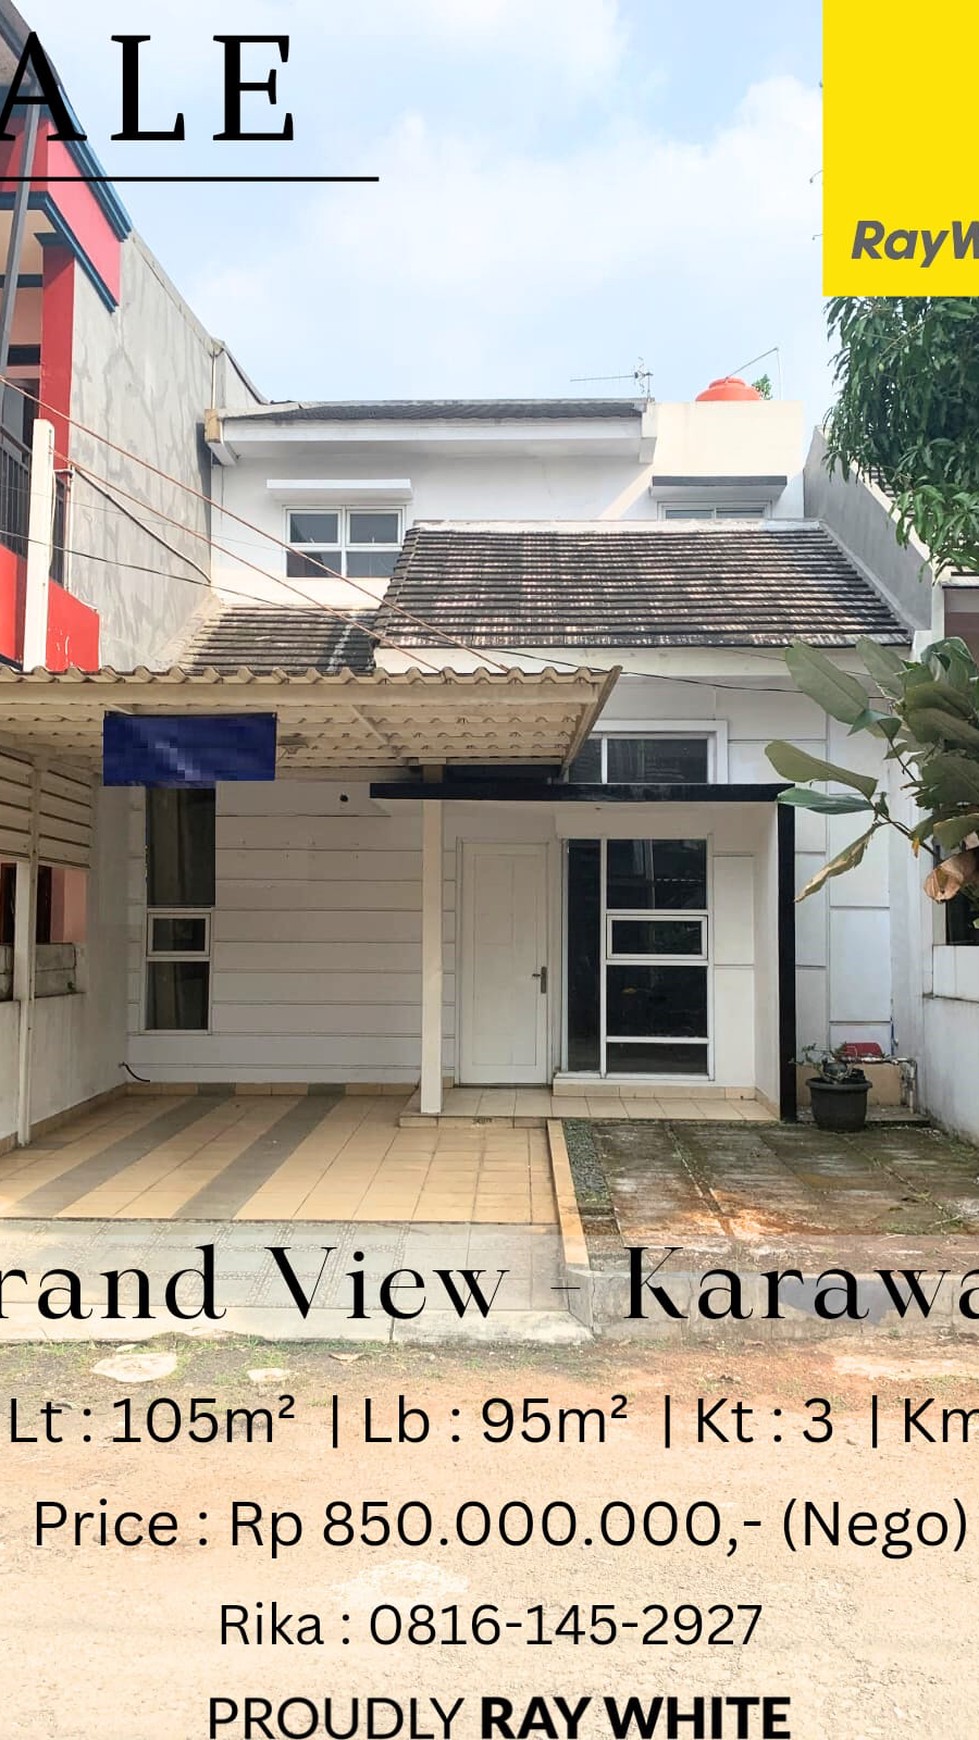 Dijual Rumah Cantik di Kawasan Grand View Karawaci dengan Harga Sangat Menarik